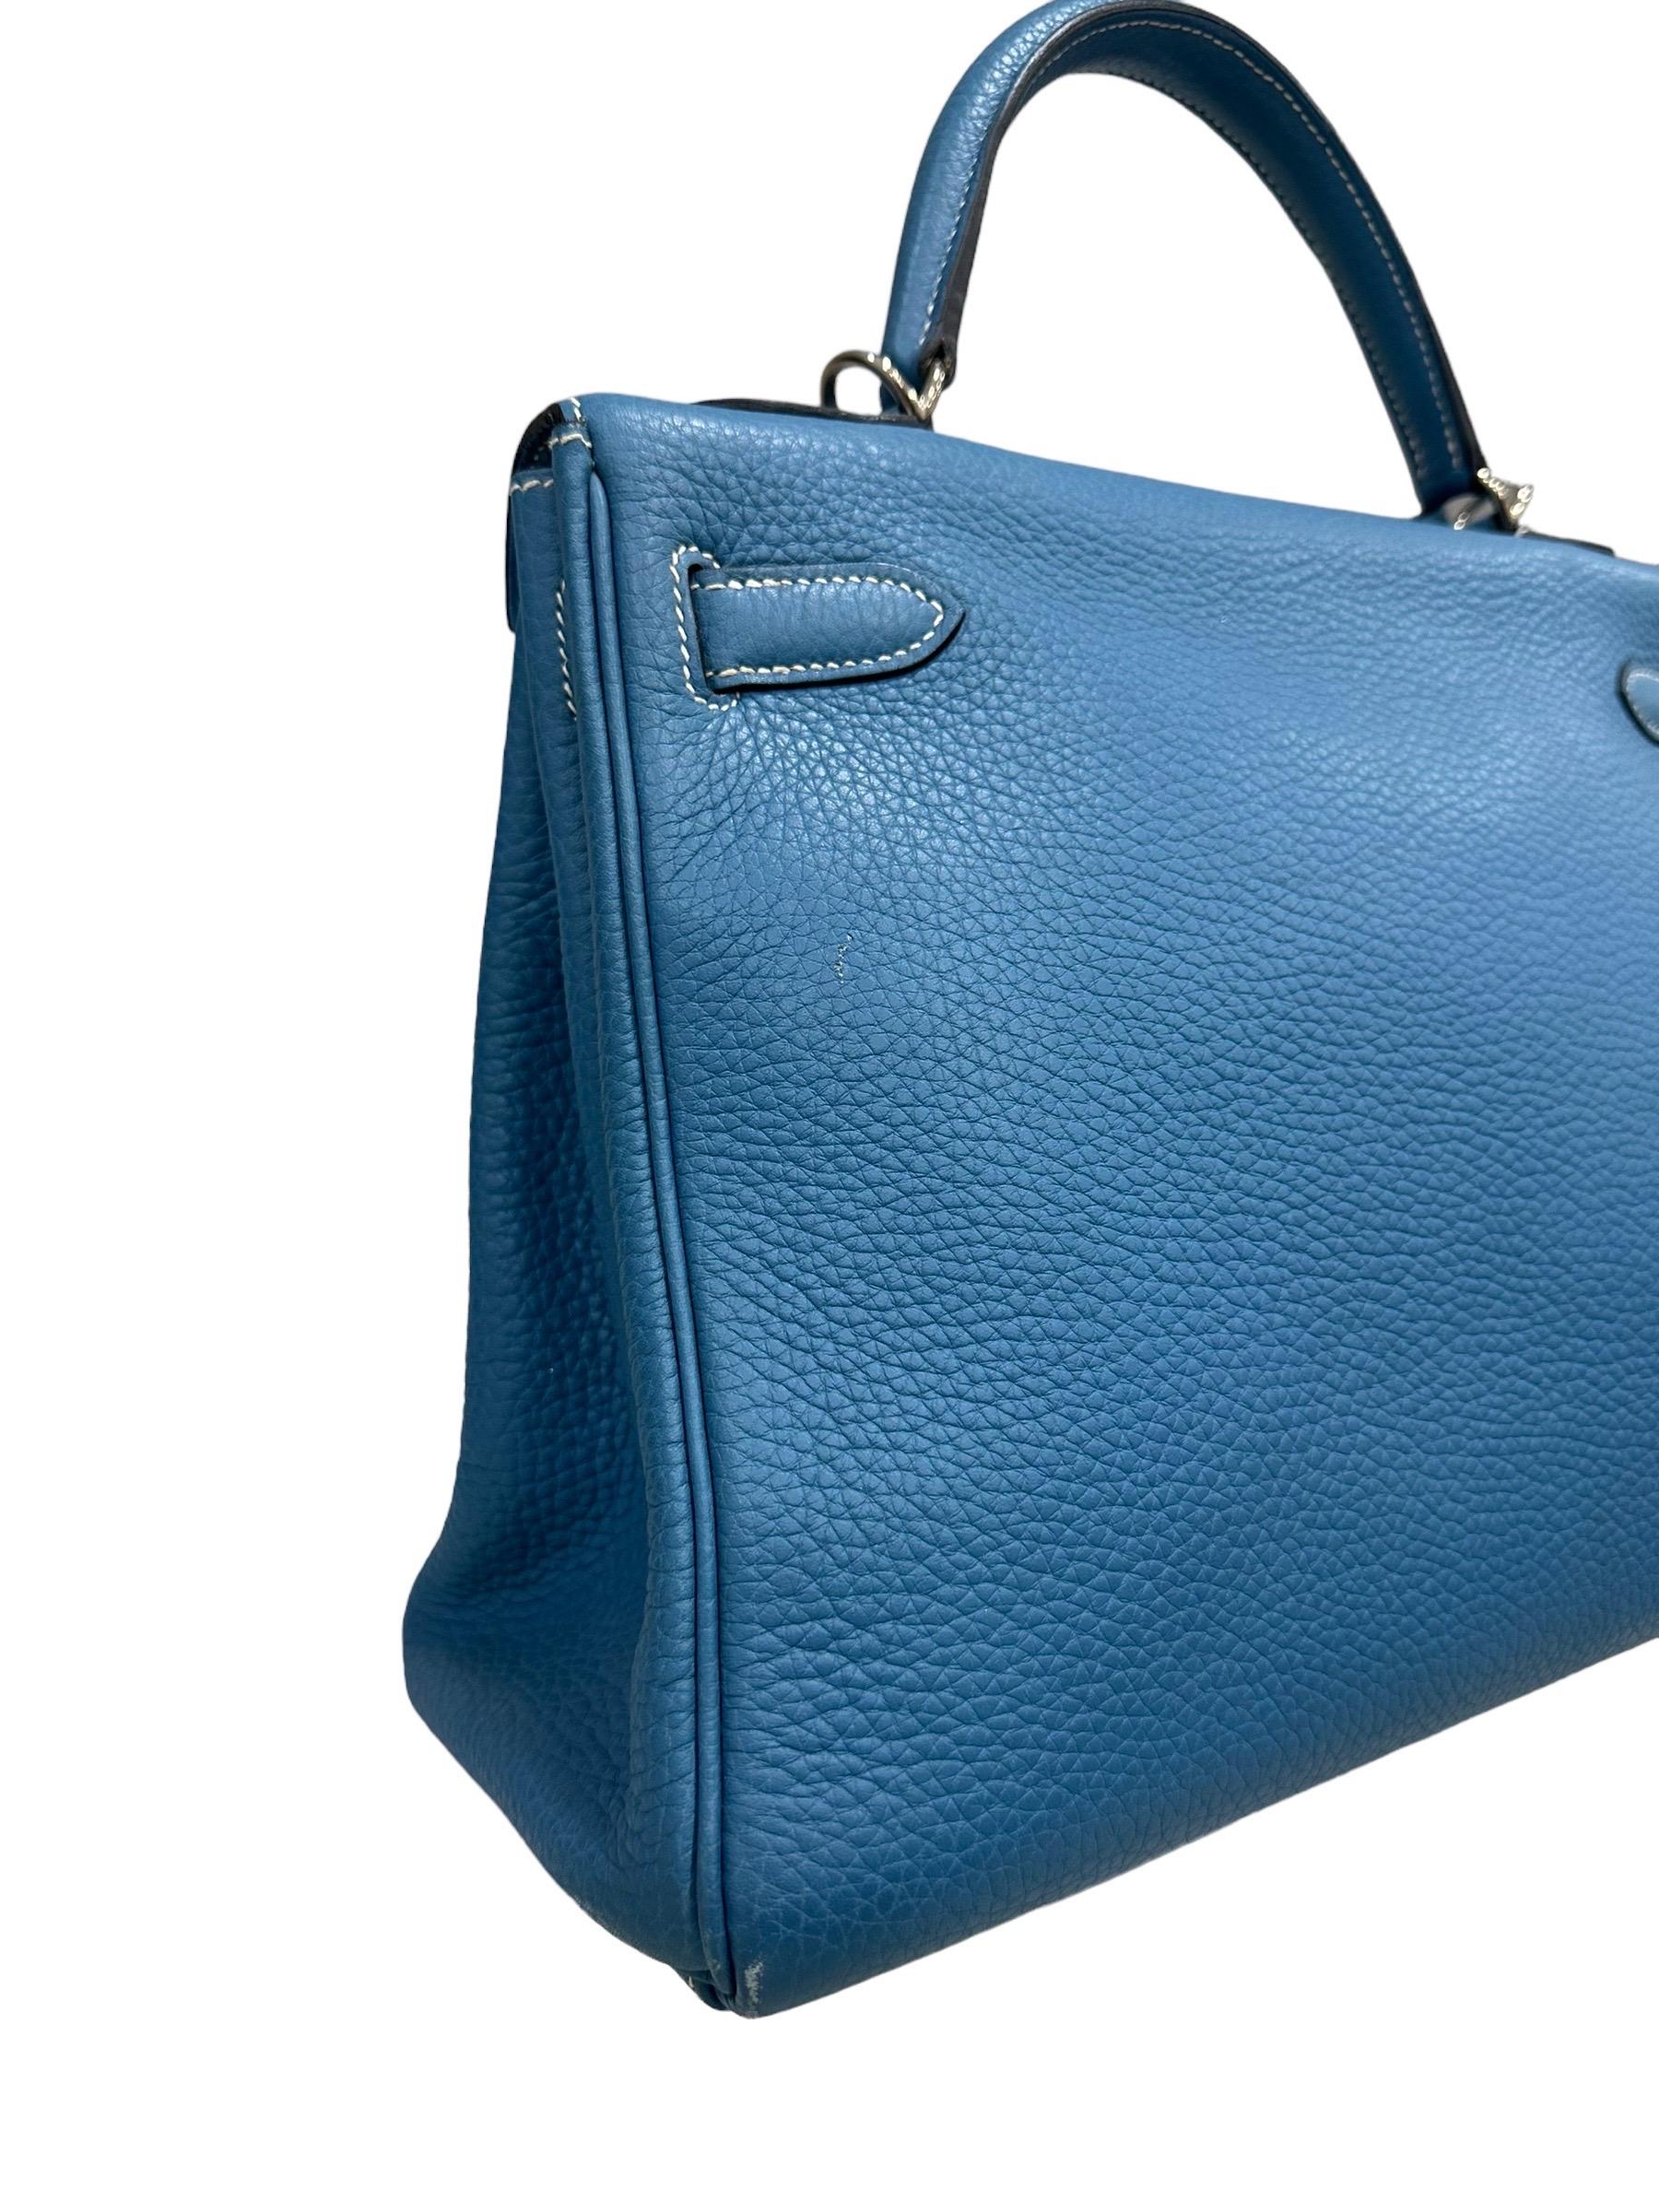 Hermès Kelly Bag 32 Clemence Leather Blue Izmir Top Handle Bag For Sale 2